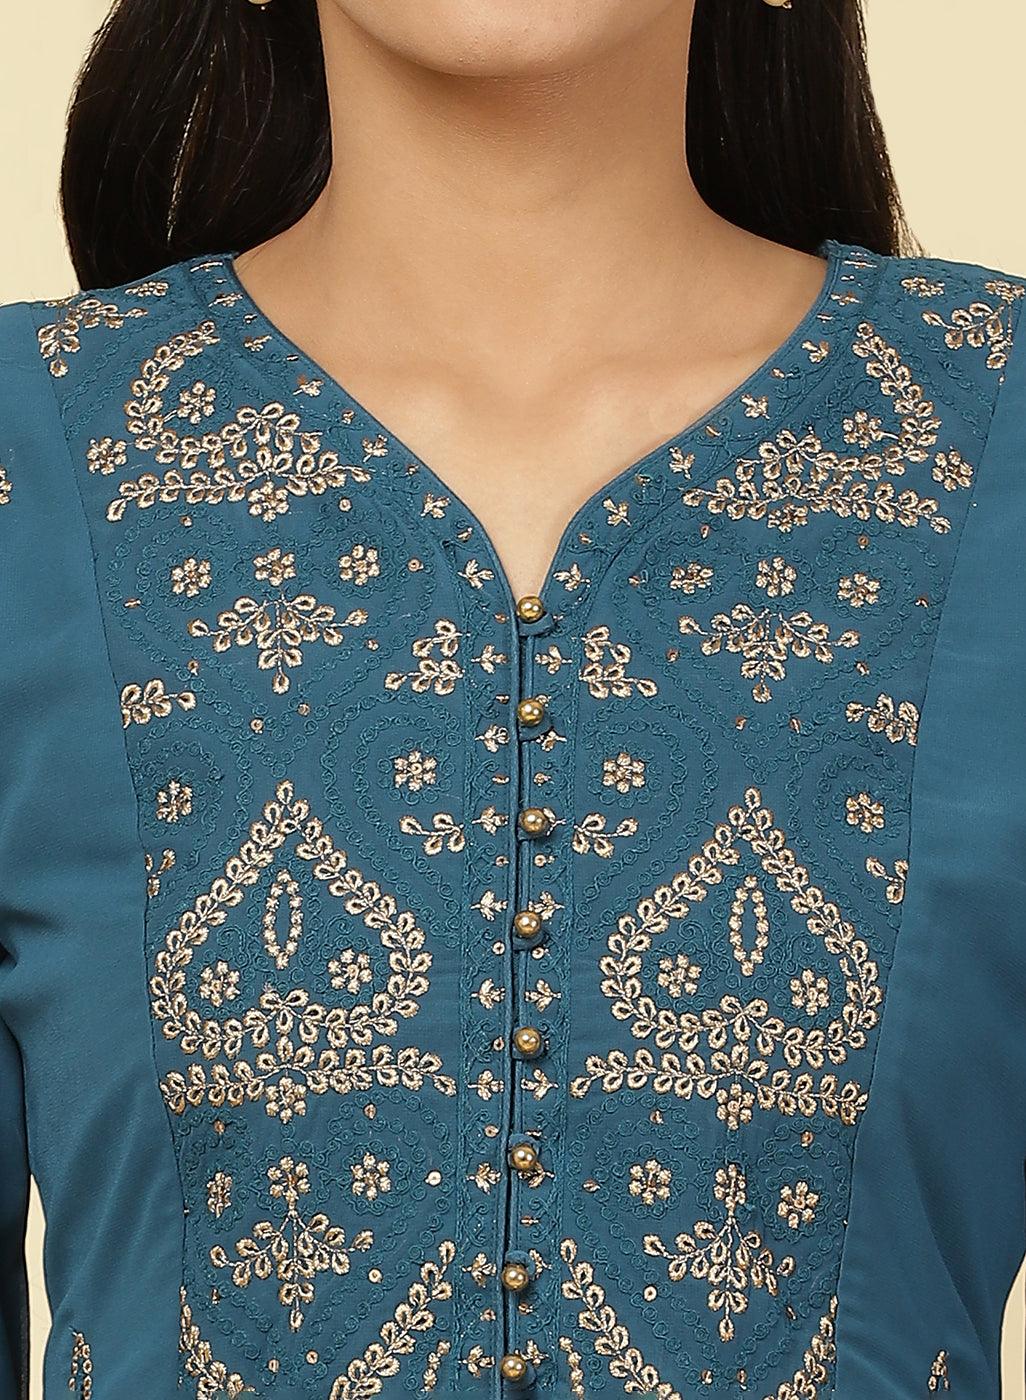 Mandana Karimi in a Azure Blue Jashn Embroidered Kurta - Lakshita